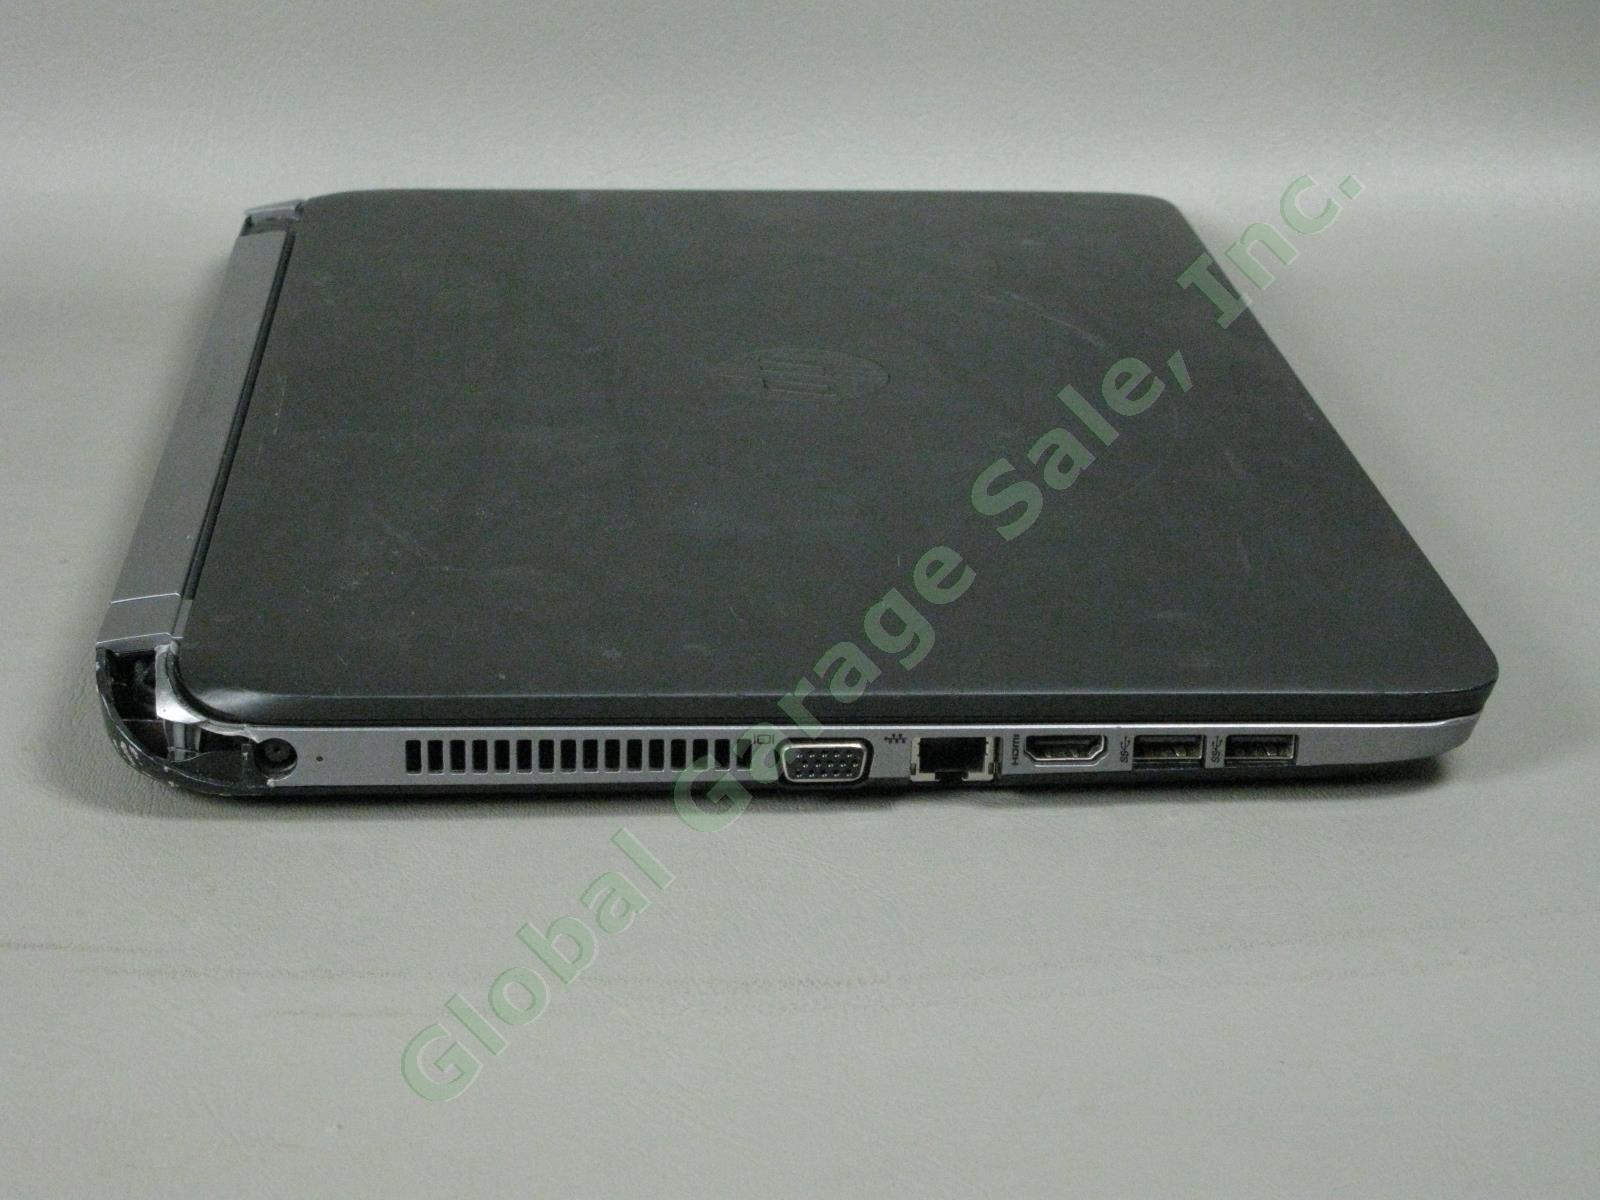 HP ProBook 450 G2 Laptop Computer i5-4210U 2.40GHz 4GB 460GB Win 10 Professional 6